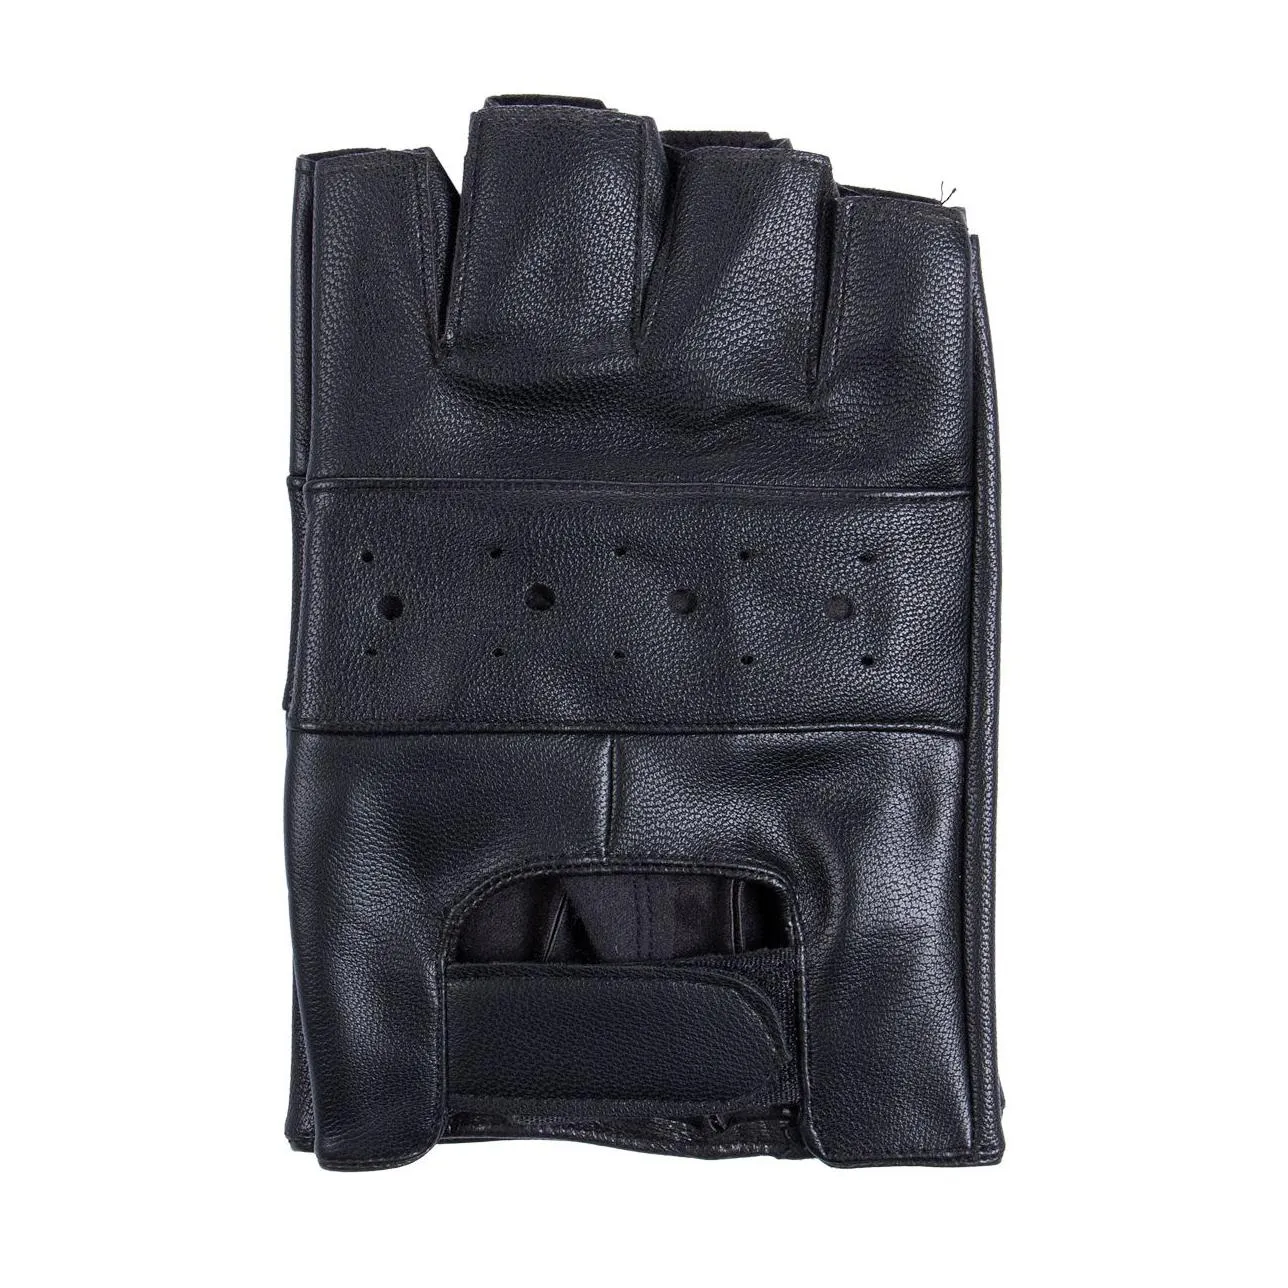 2019 new fashion men039s leather gloves half finger fingerless stage sports driving solid black gloves3862185